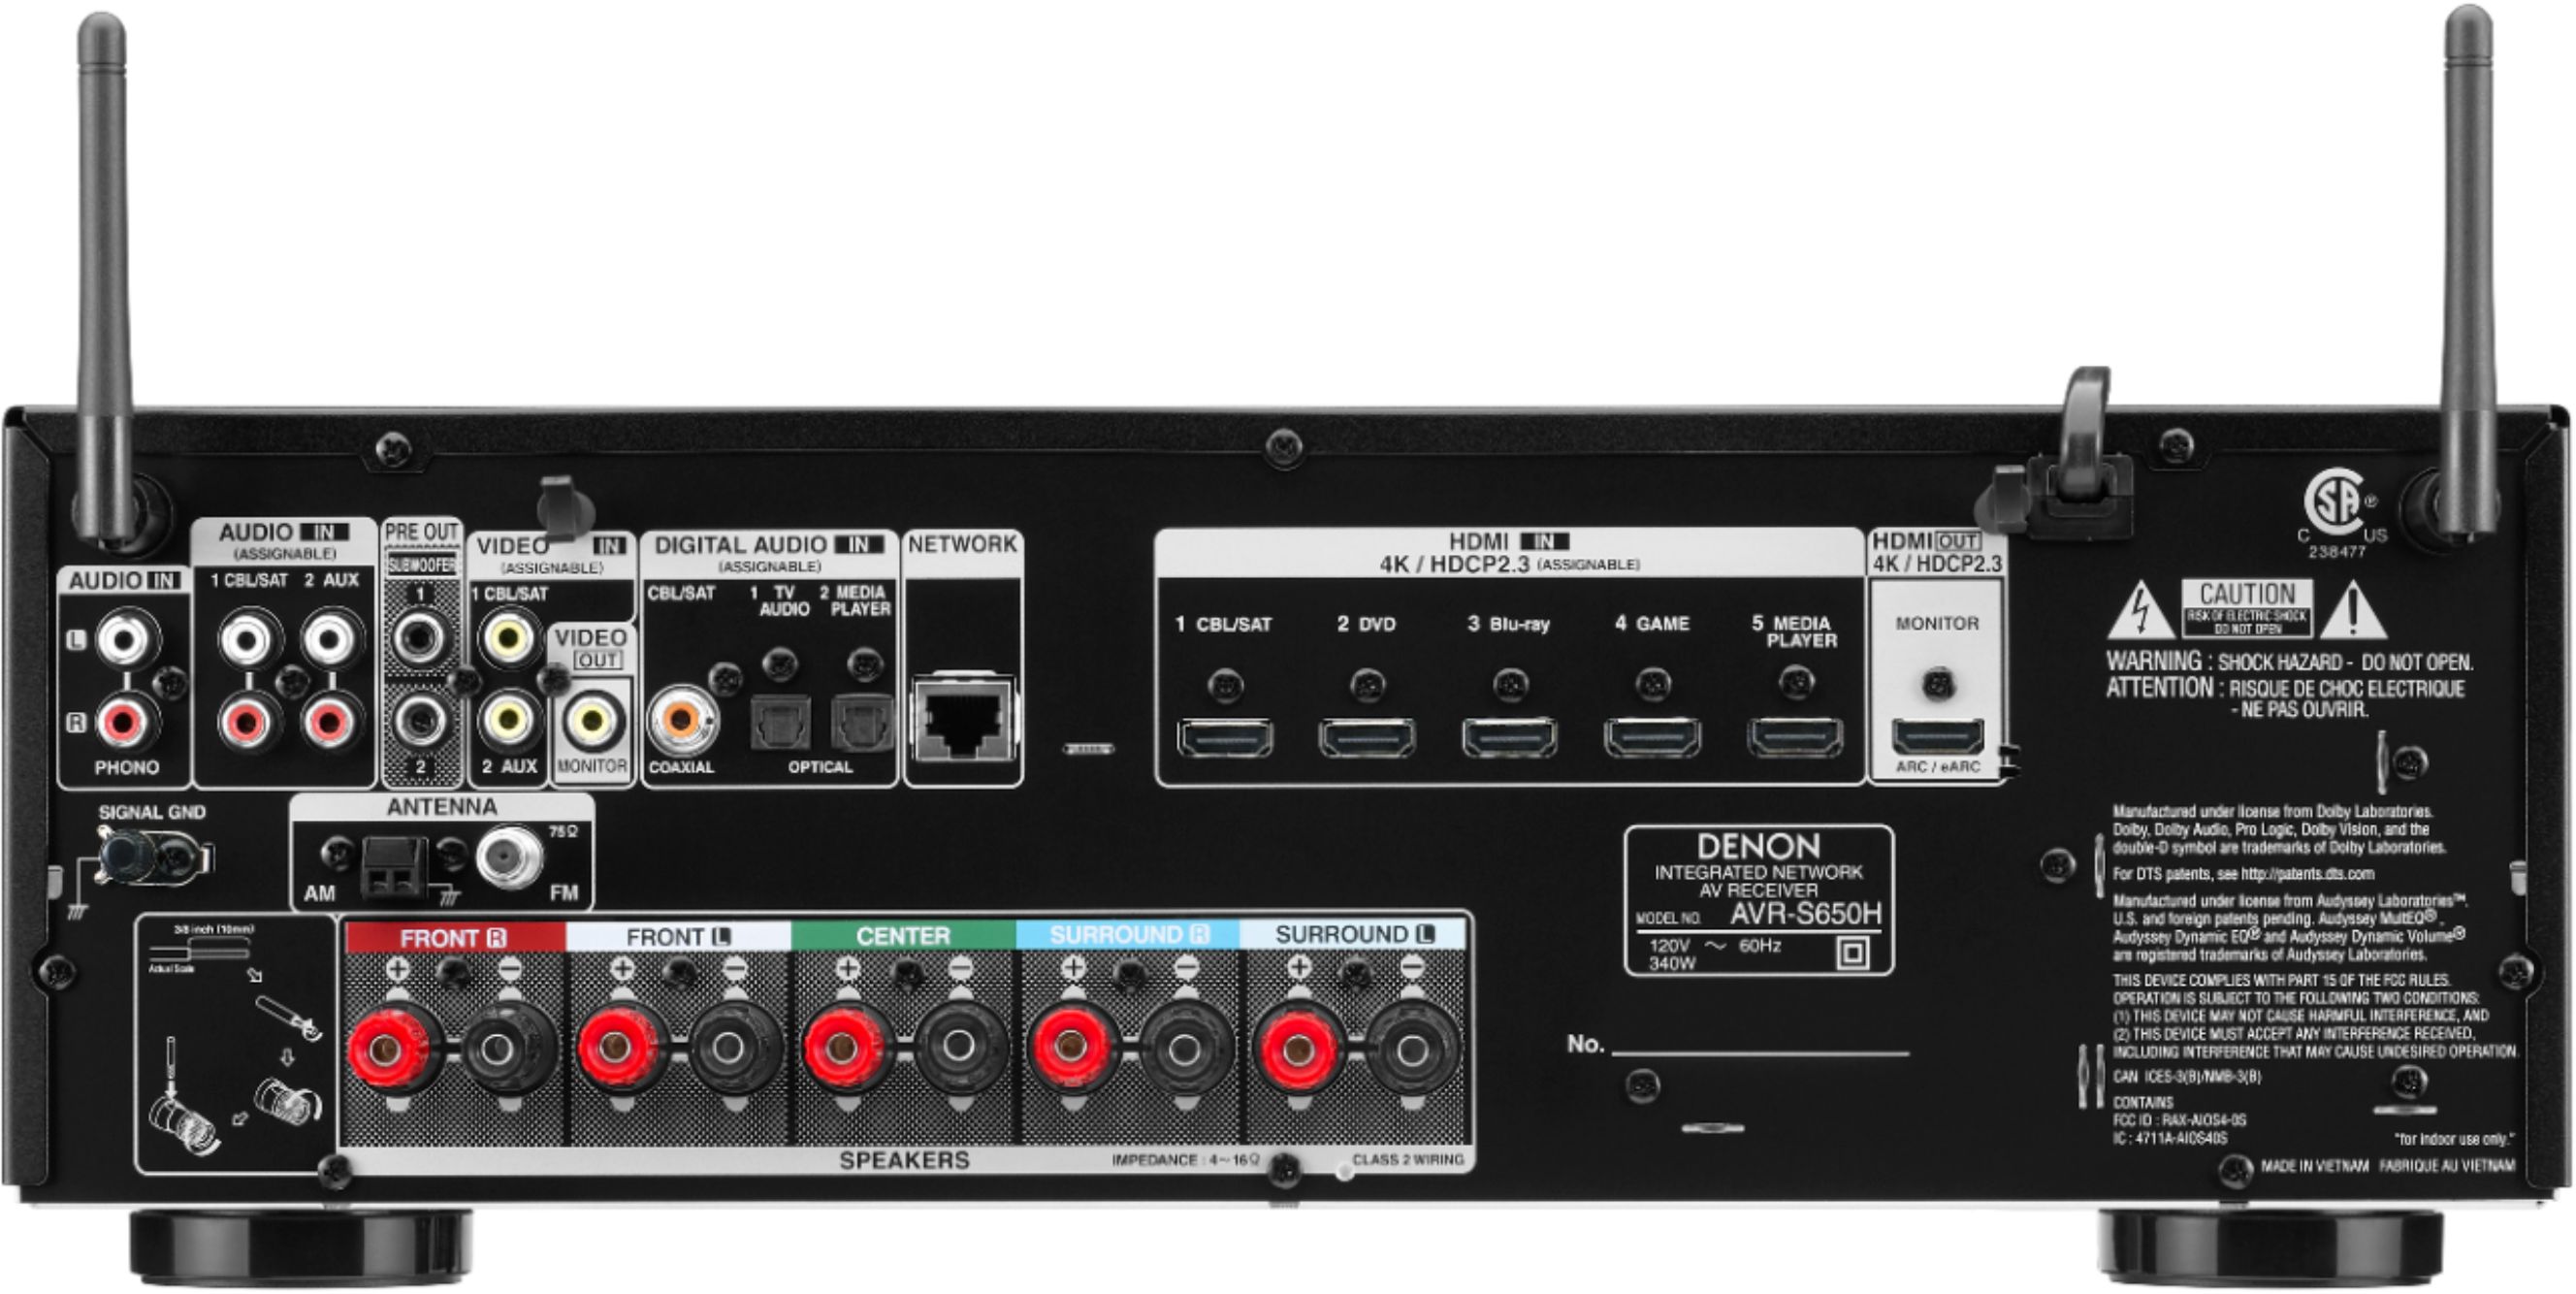 Receptor AV DENON AVR-650H, WI-FI, Bluetooth, 4K, 75W, 5.2 canales estéreo,  color Negro